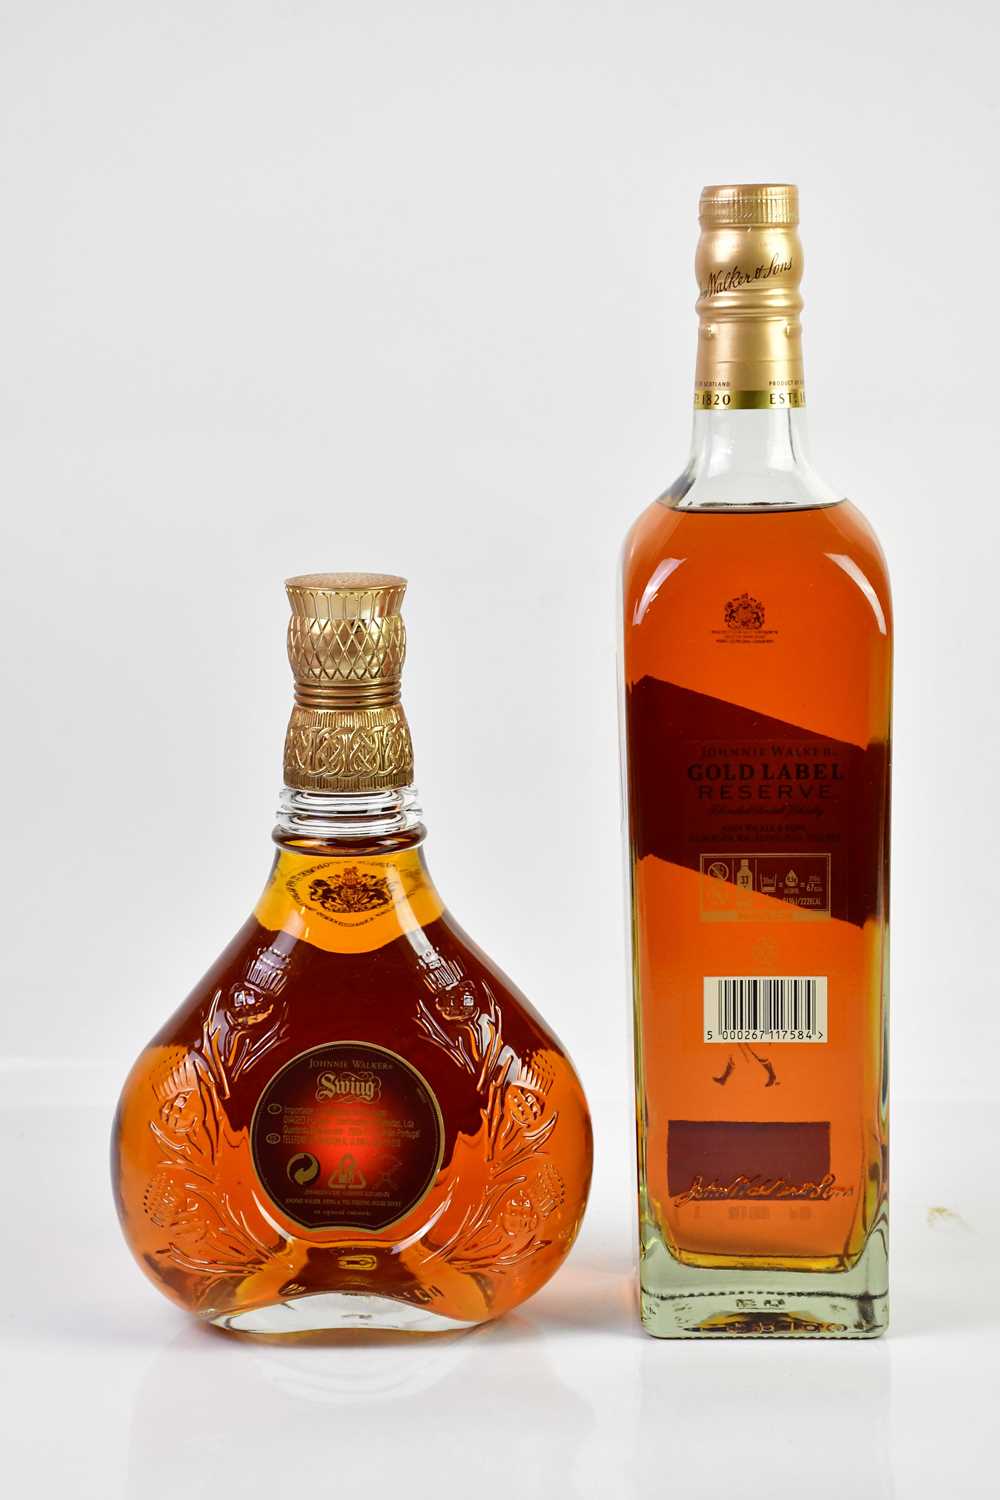 WHISKY; a bottle of Johnnie Walker Gold Label Reserve Blended Scotch whisky, 40%, 1l, boxed, - Image 3 of 3